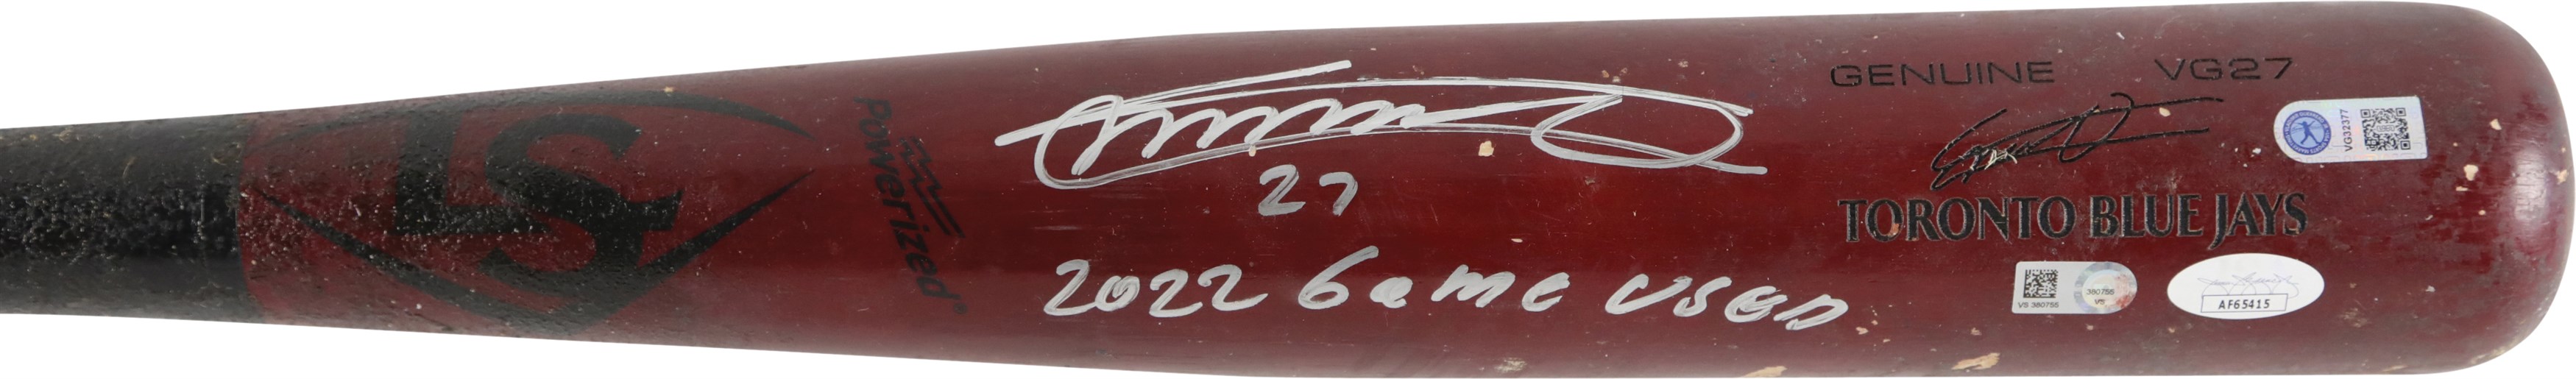 Baseball Equipment - 2022 Vladimir Guerrero Jr. Signed Game Used Bat (Photo-Matched, PSA GU 9 & MLB Holo)